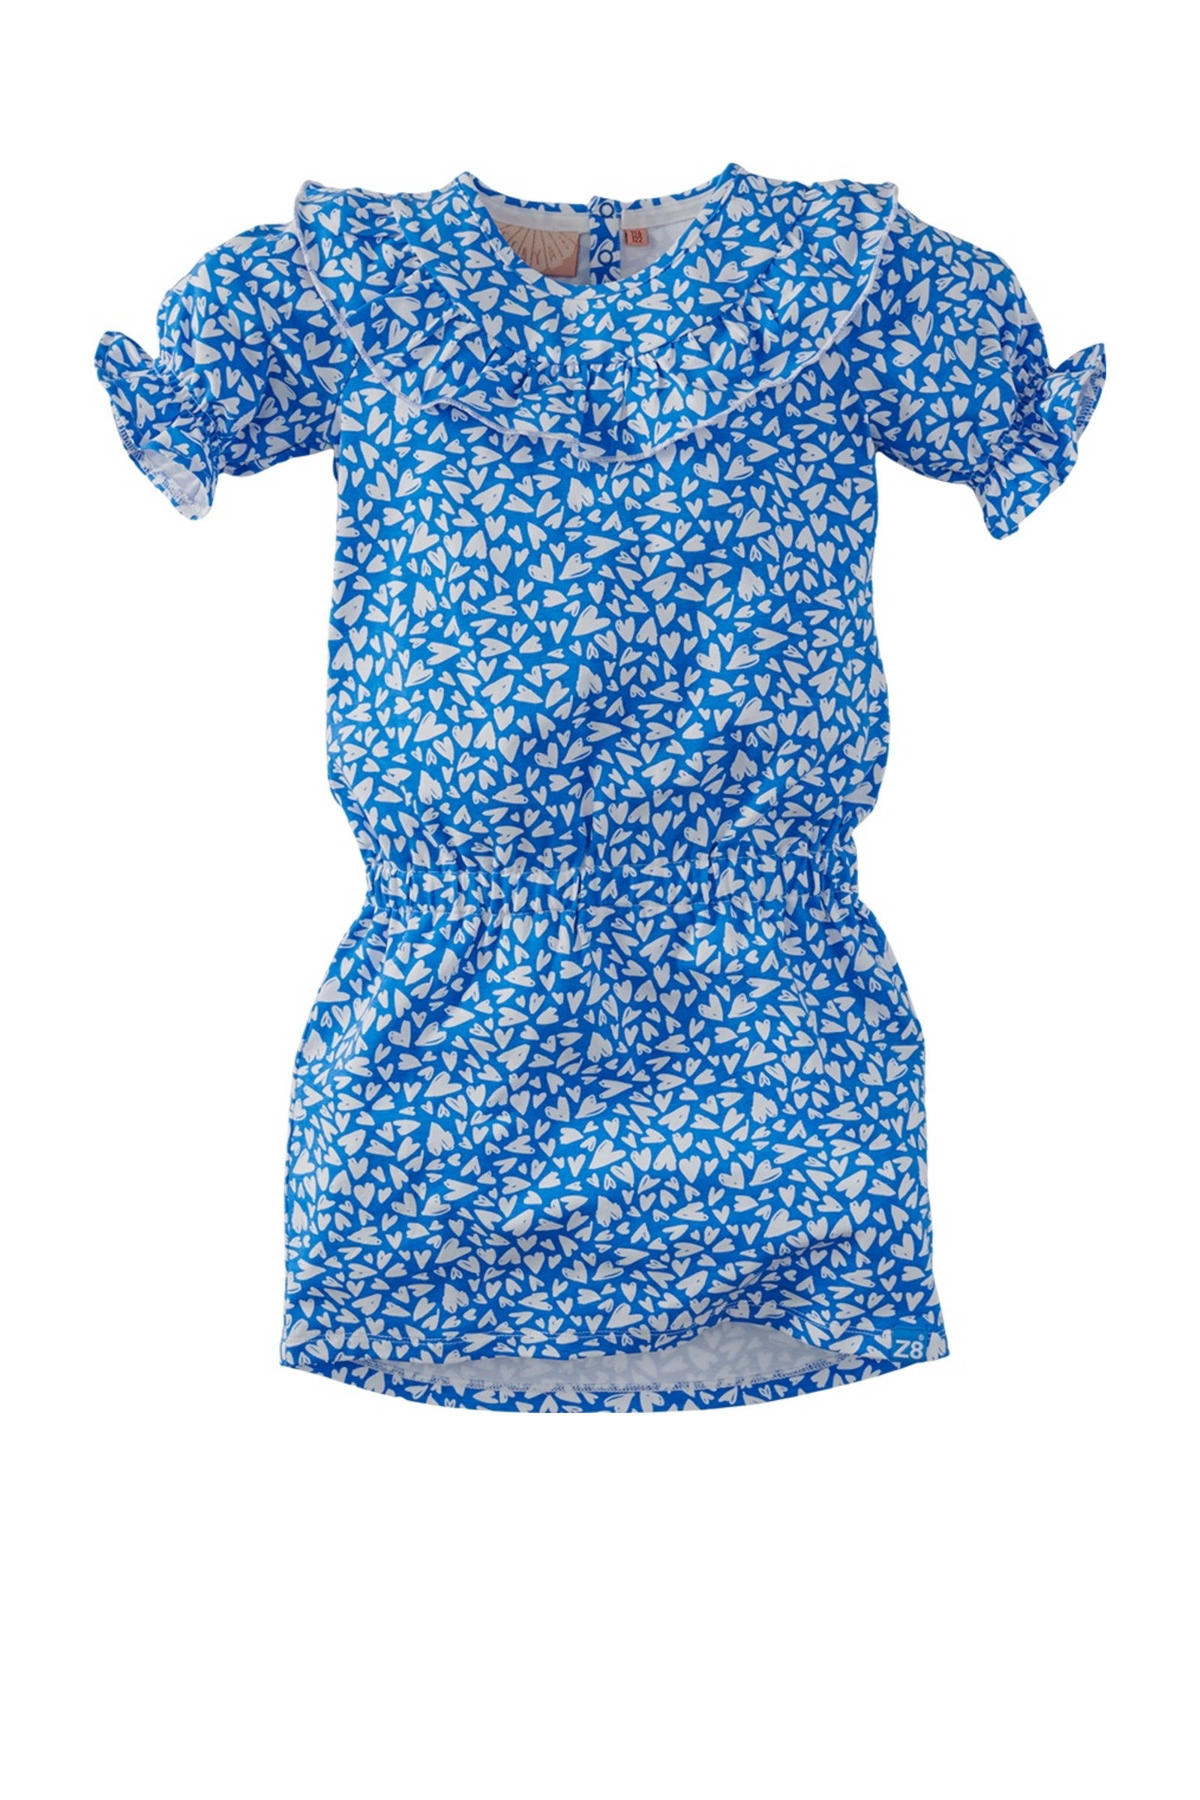 geroosterd brood Kapel Grillig Z8 jurk Gita met all over print blauw/wit | wehkamp